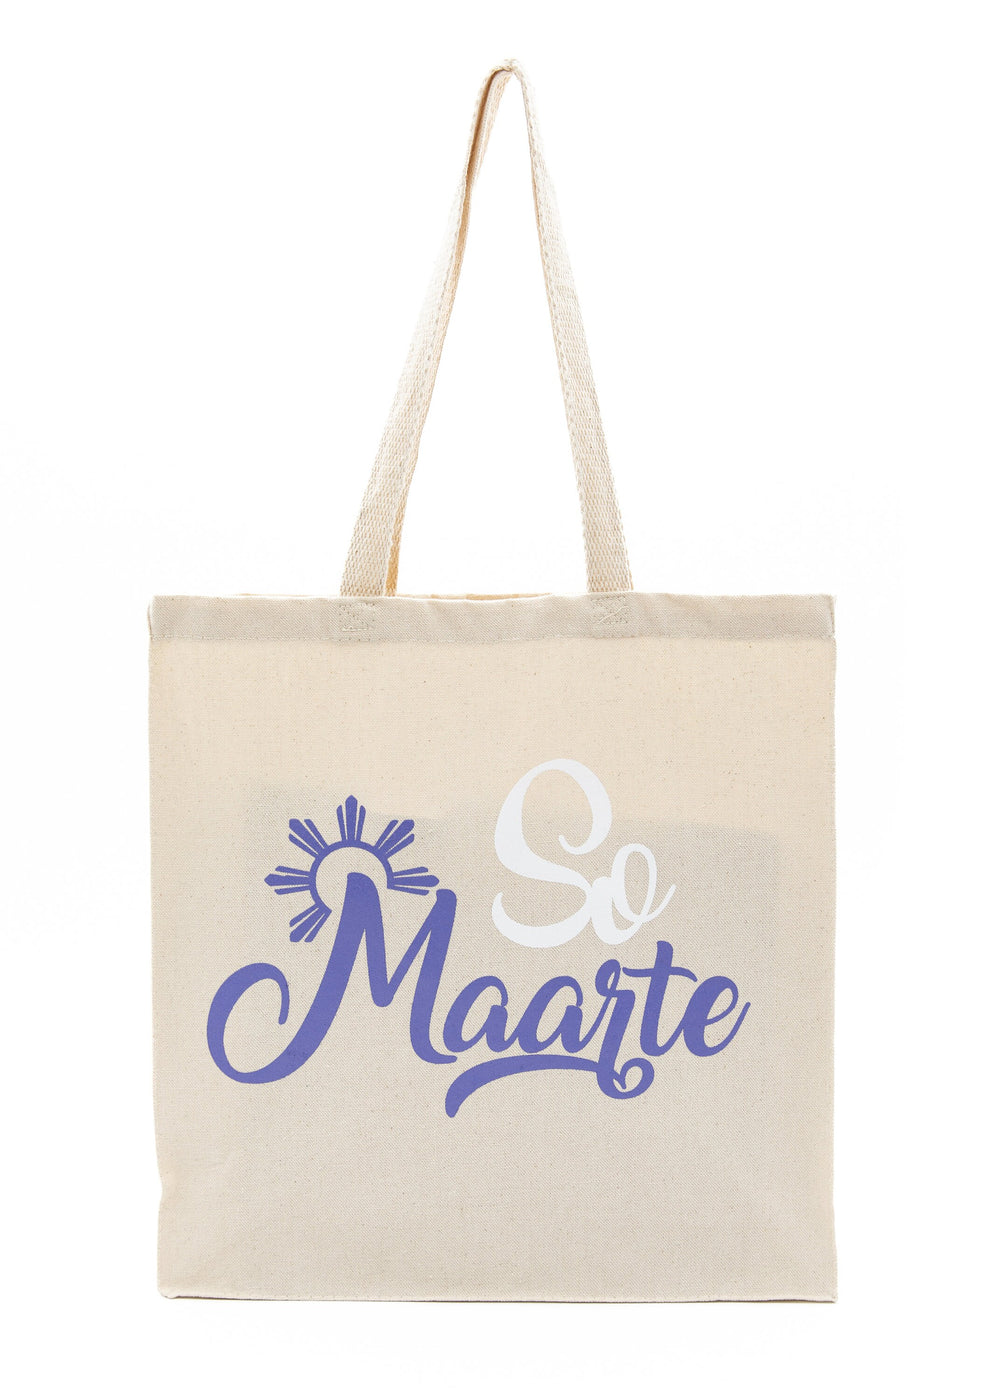 So Maarte Tote Bags, Filipino Tote Bags, Filipina, Shopping Bag, 14x15 Tote Bag, Natural